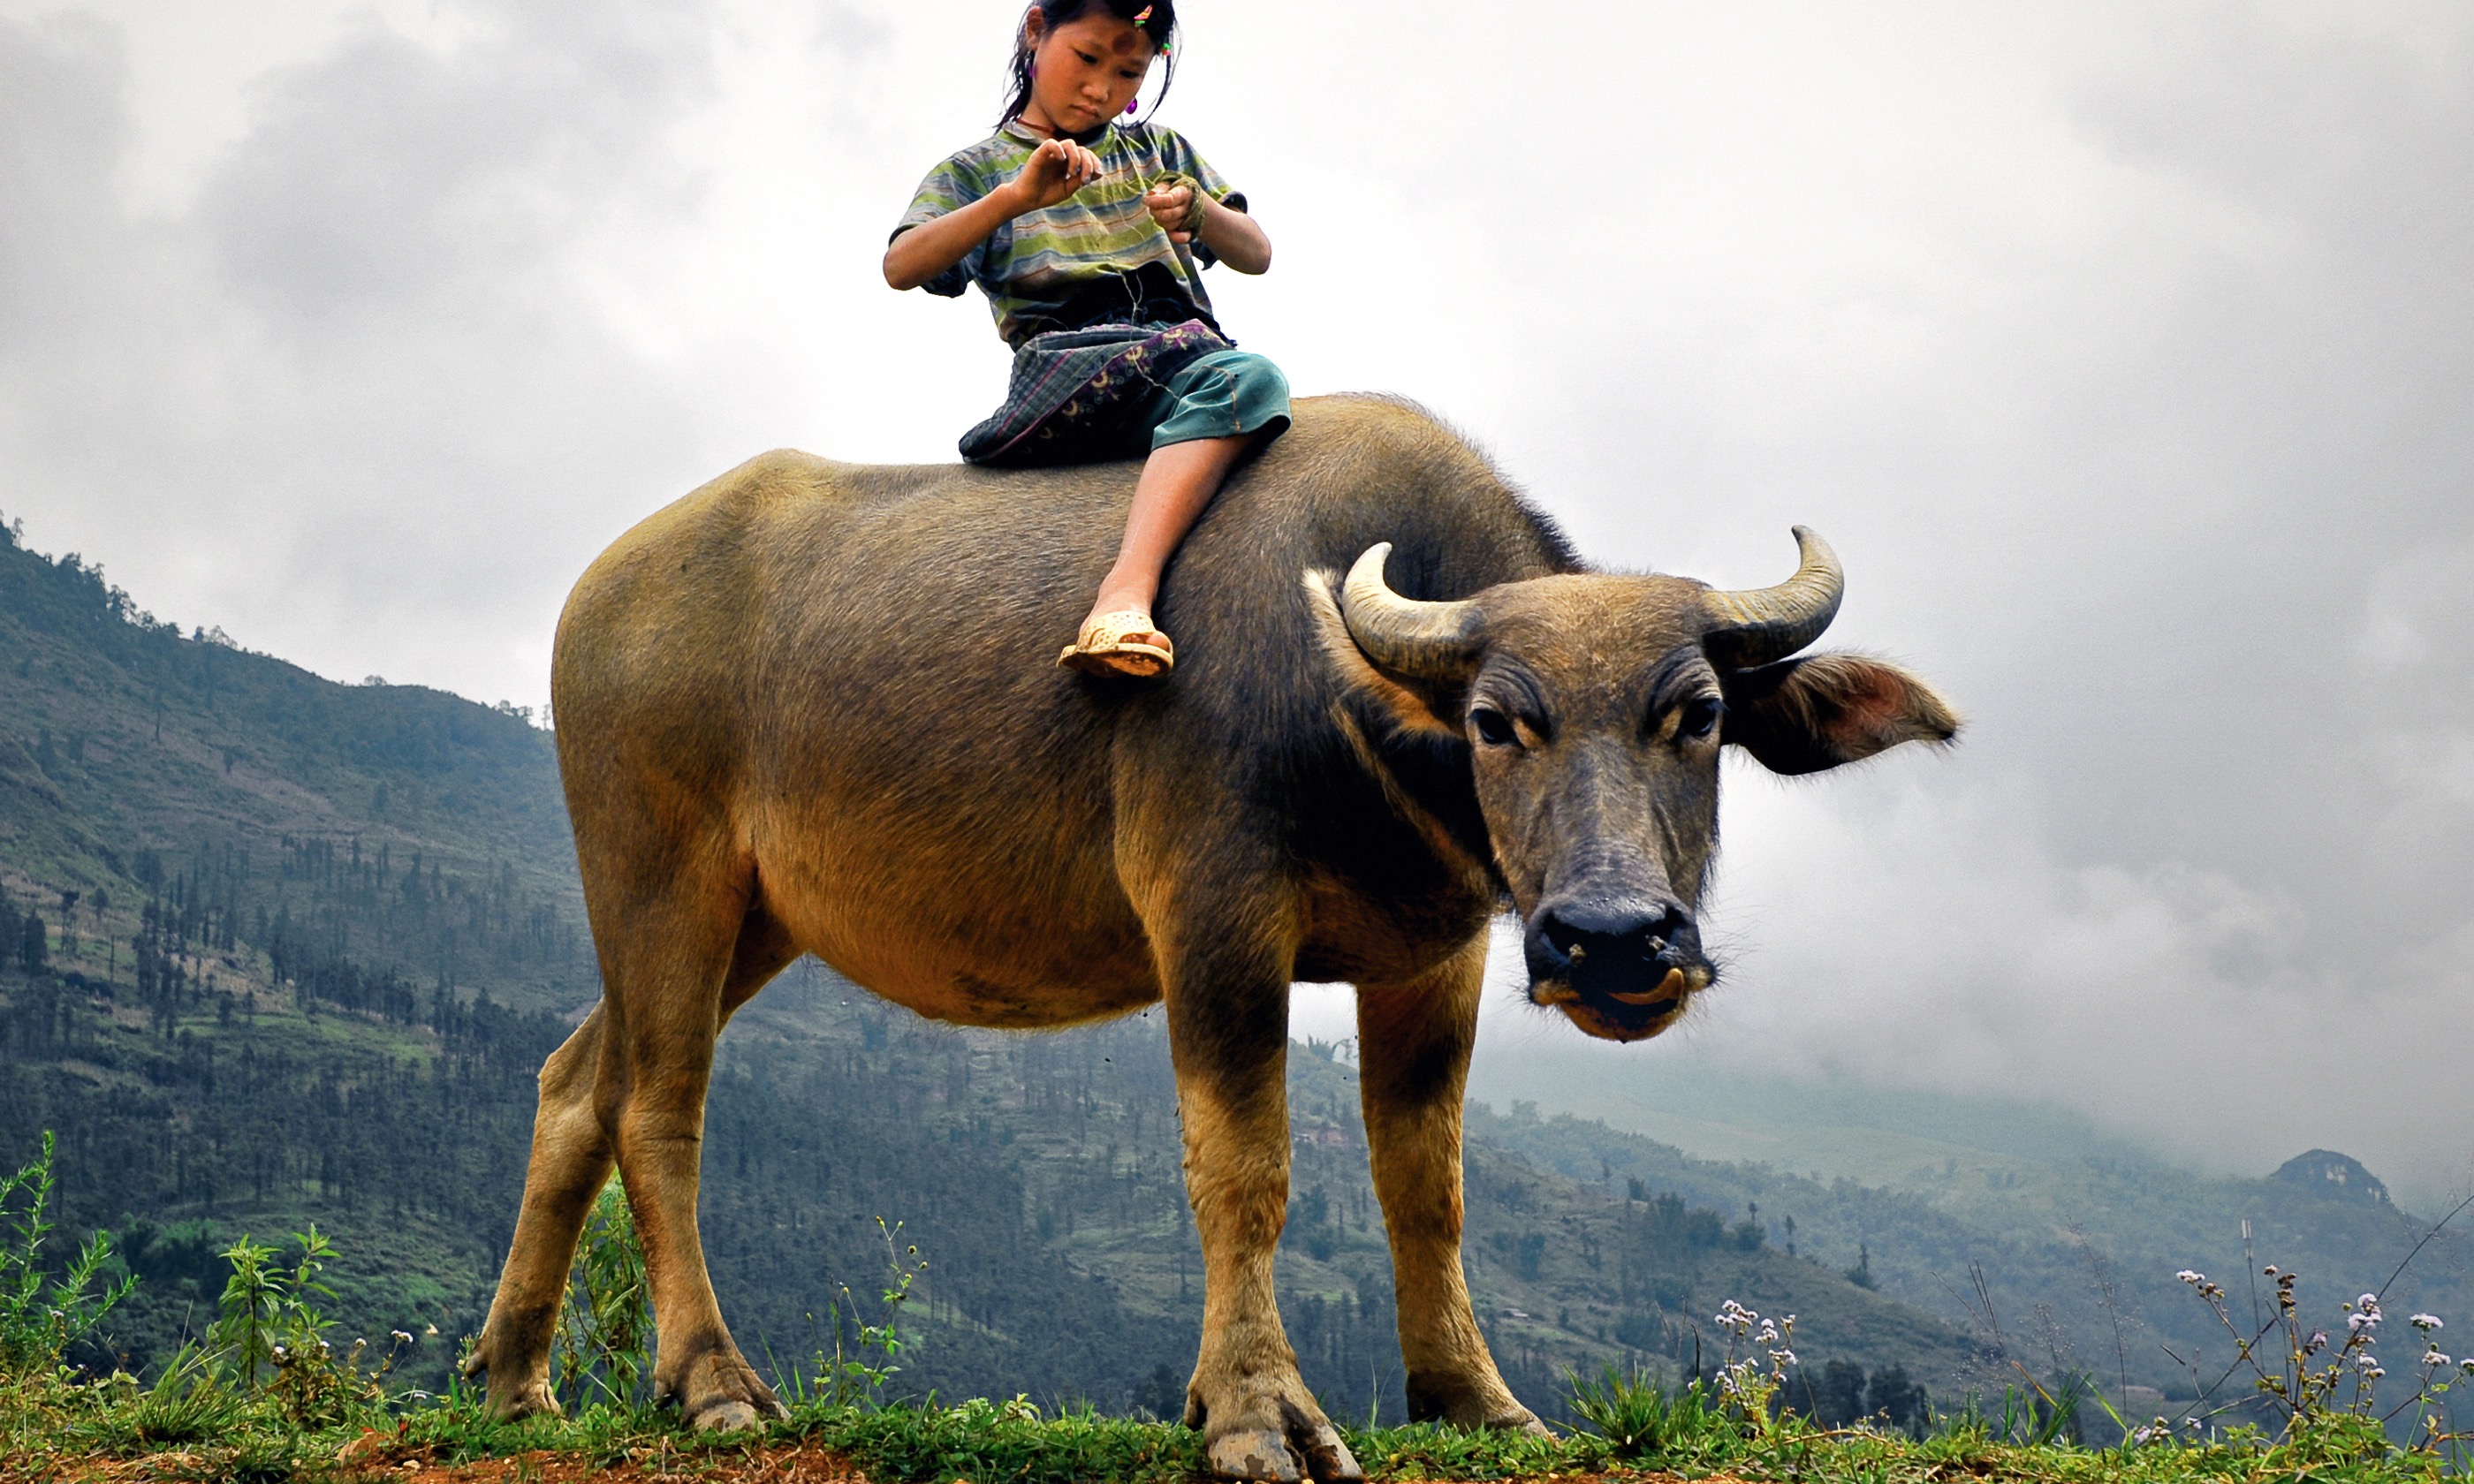 Girl riding a buffalo in Laos (Shutterstock.com. See main credit below)